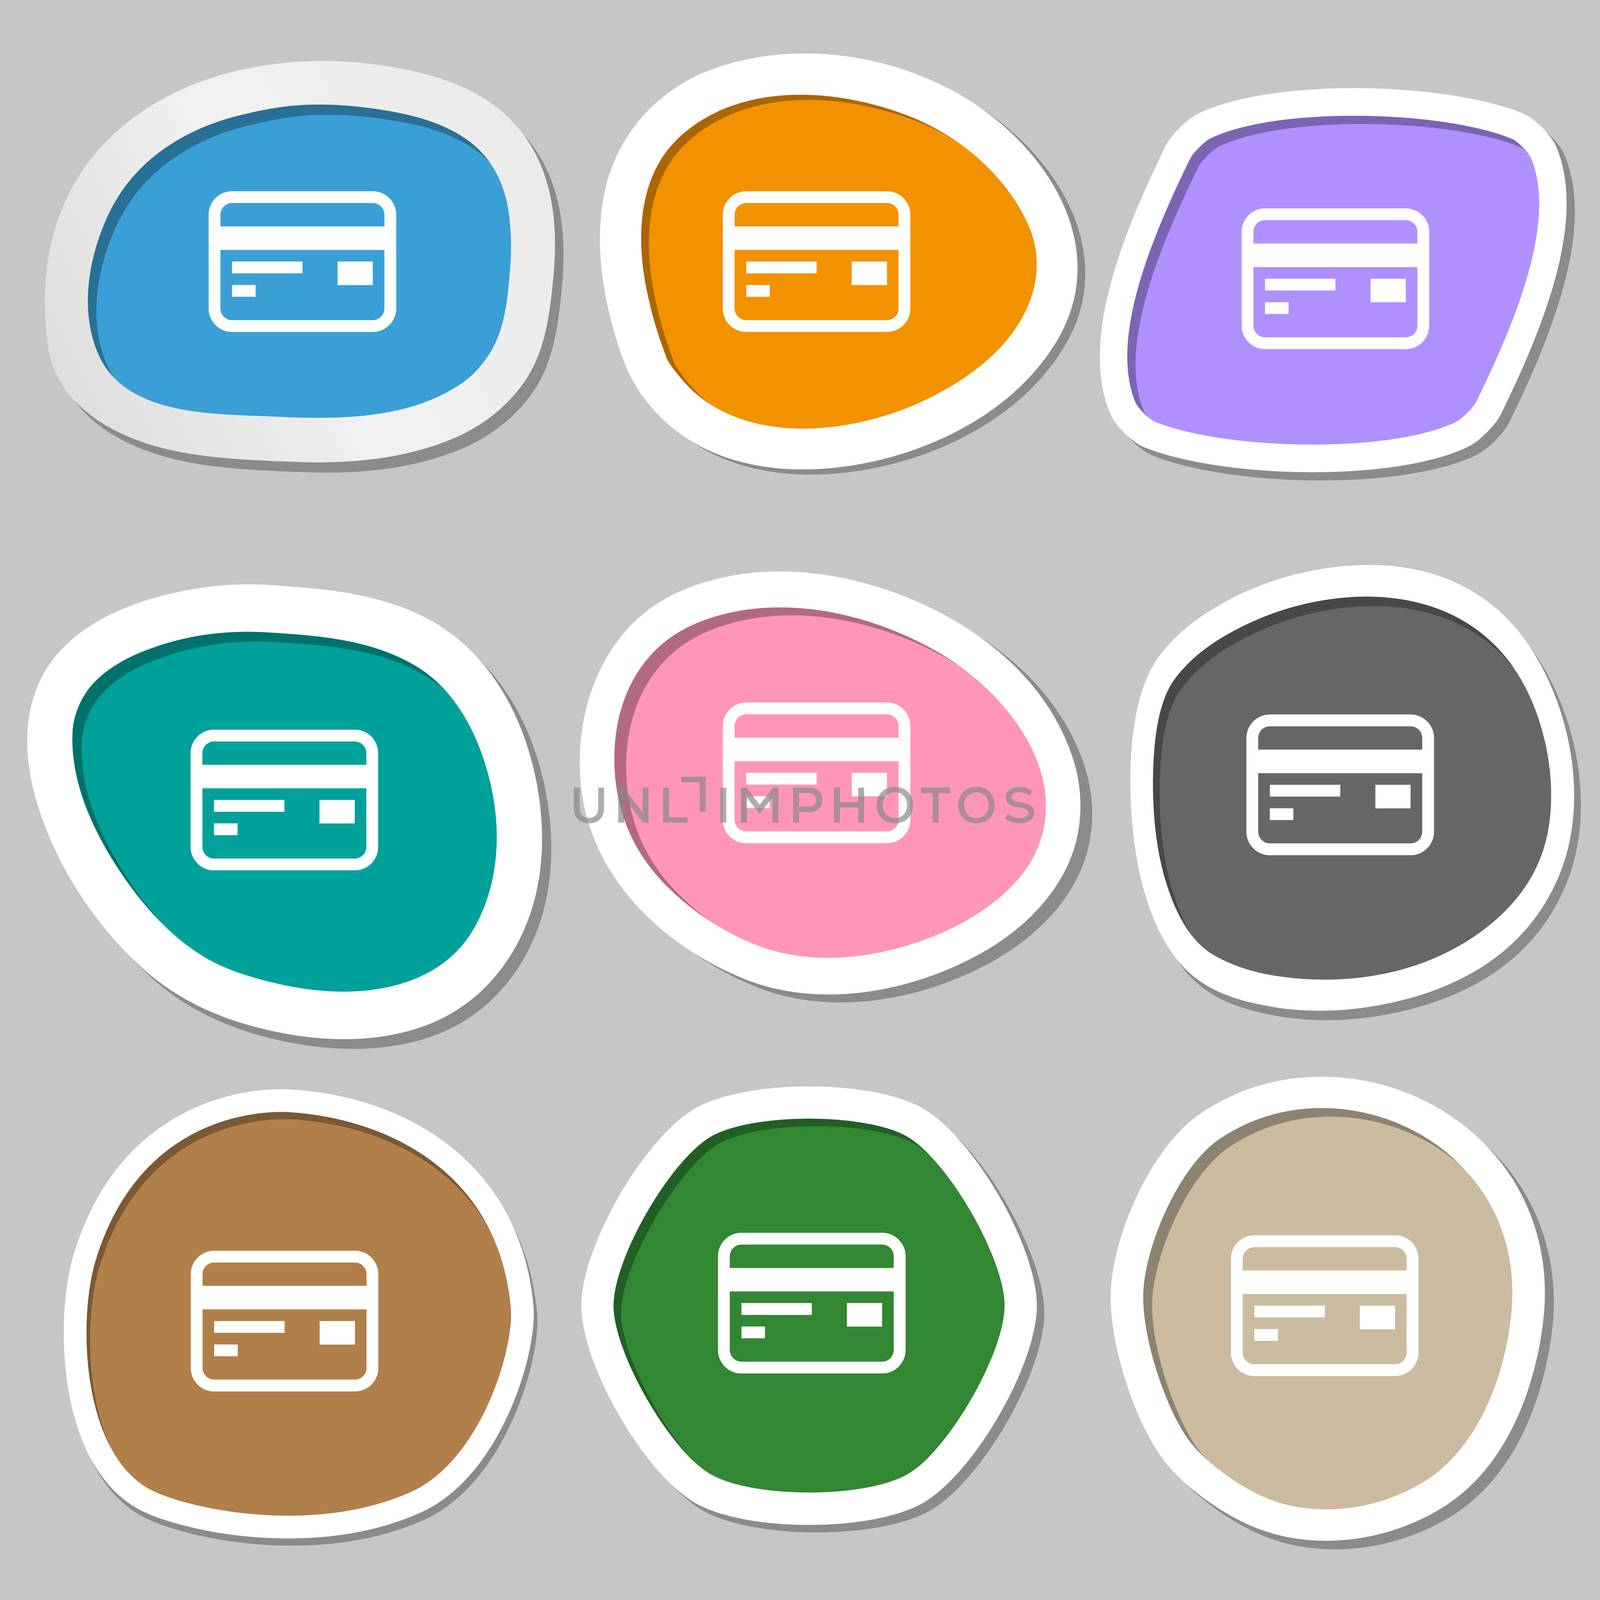 Credit, debit card icon symbols. Multicolored paper stickers.  by serhii_lohvyniuk